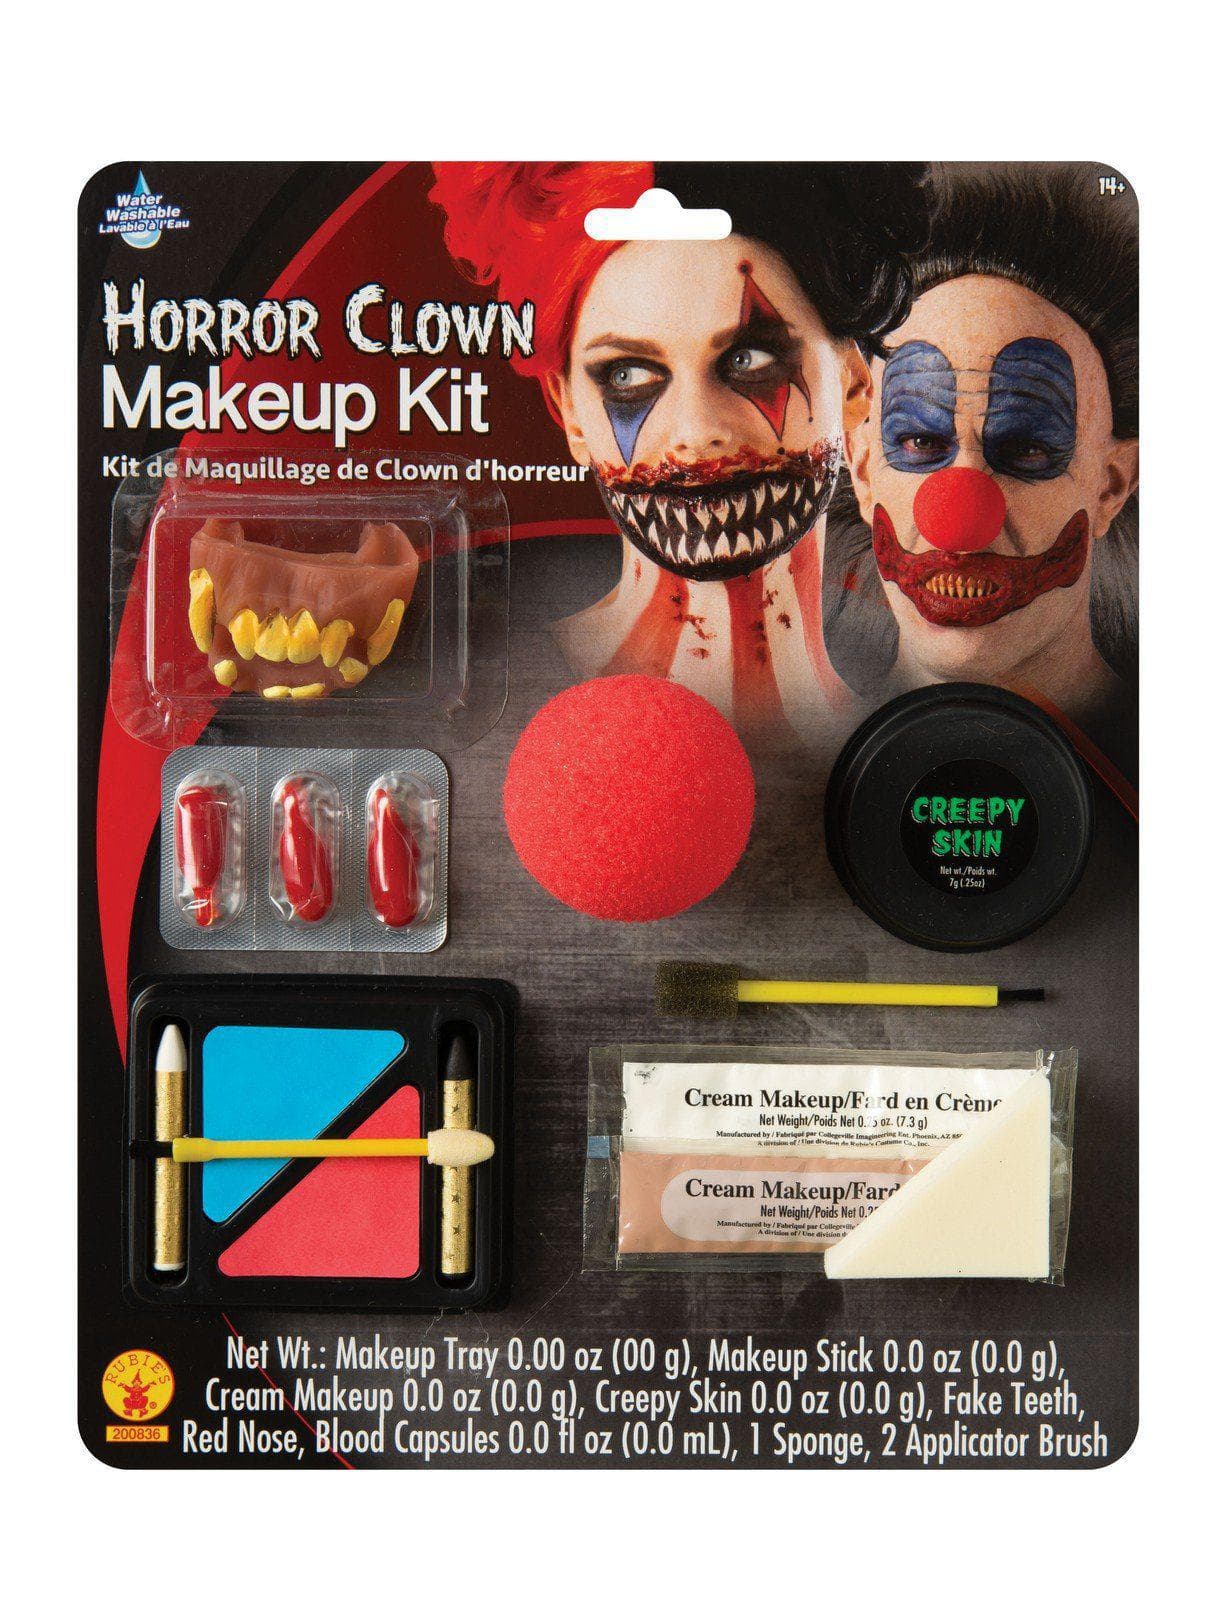 Clown Horror Makeup Kit - costumes.com